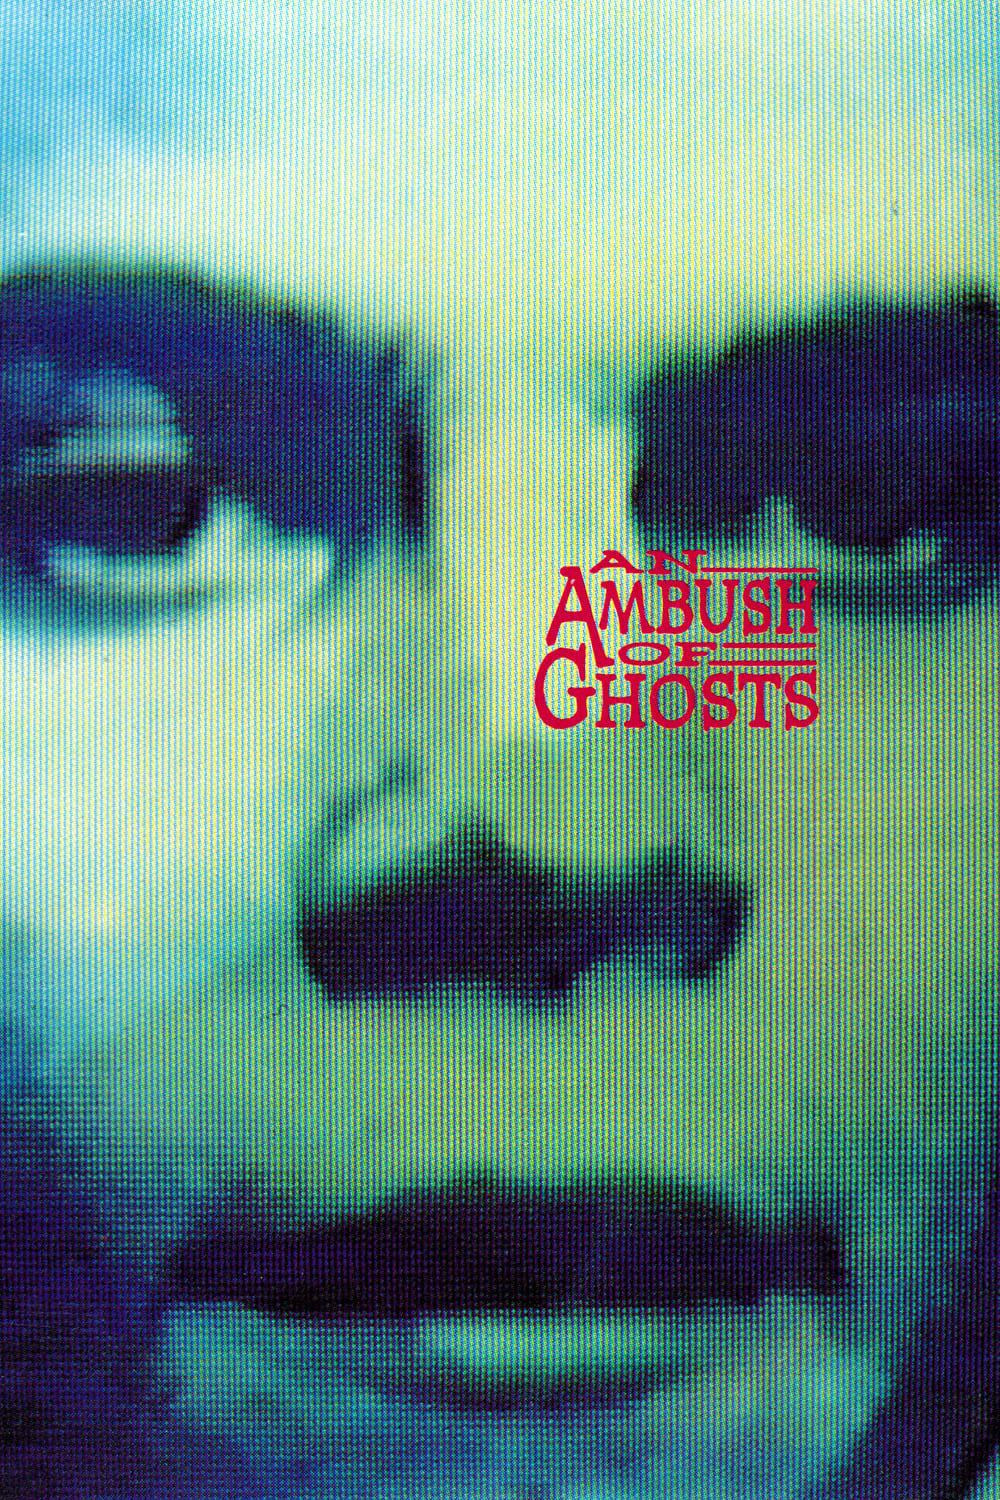 An Ambush of Ghosts (1993)